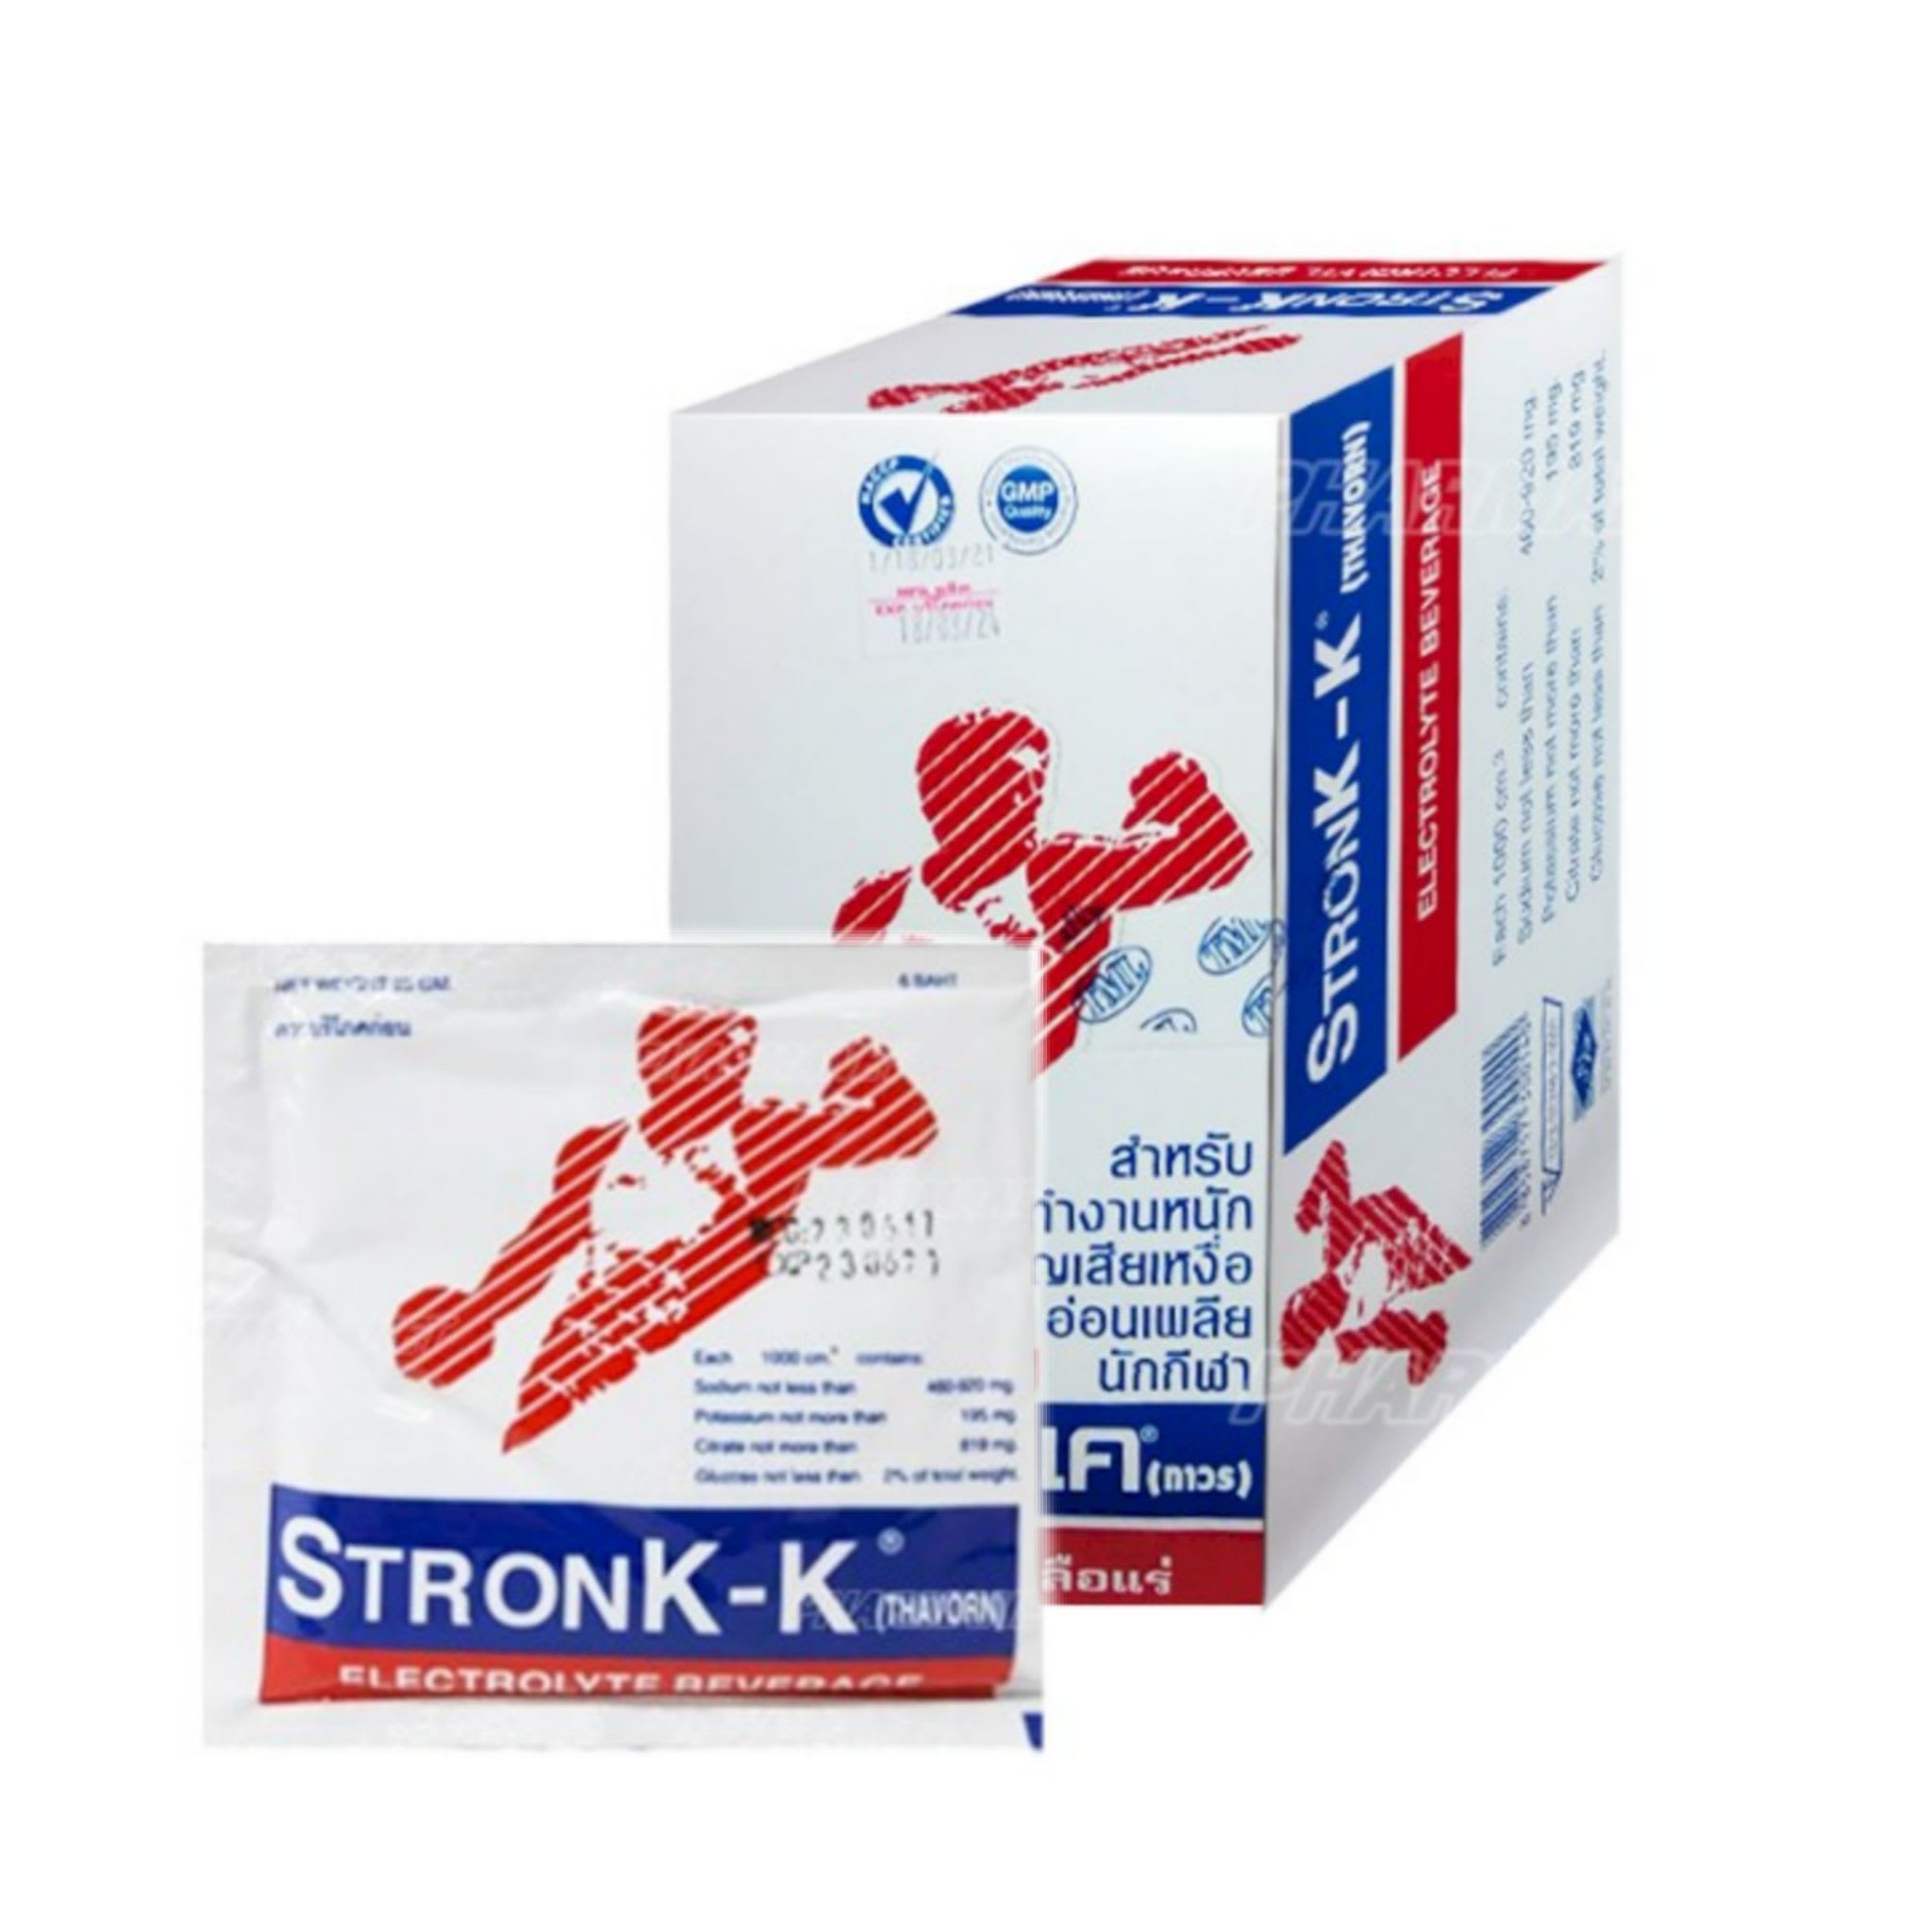 Stronk-k